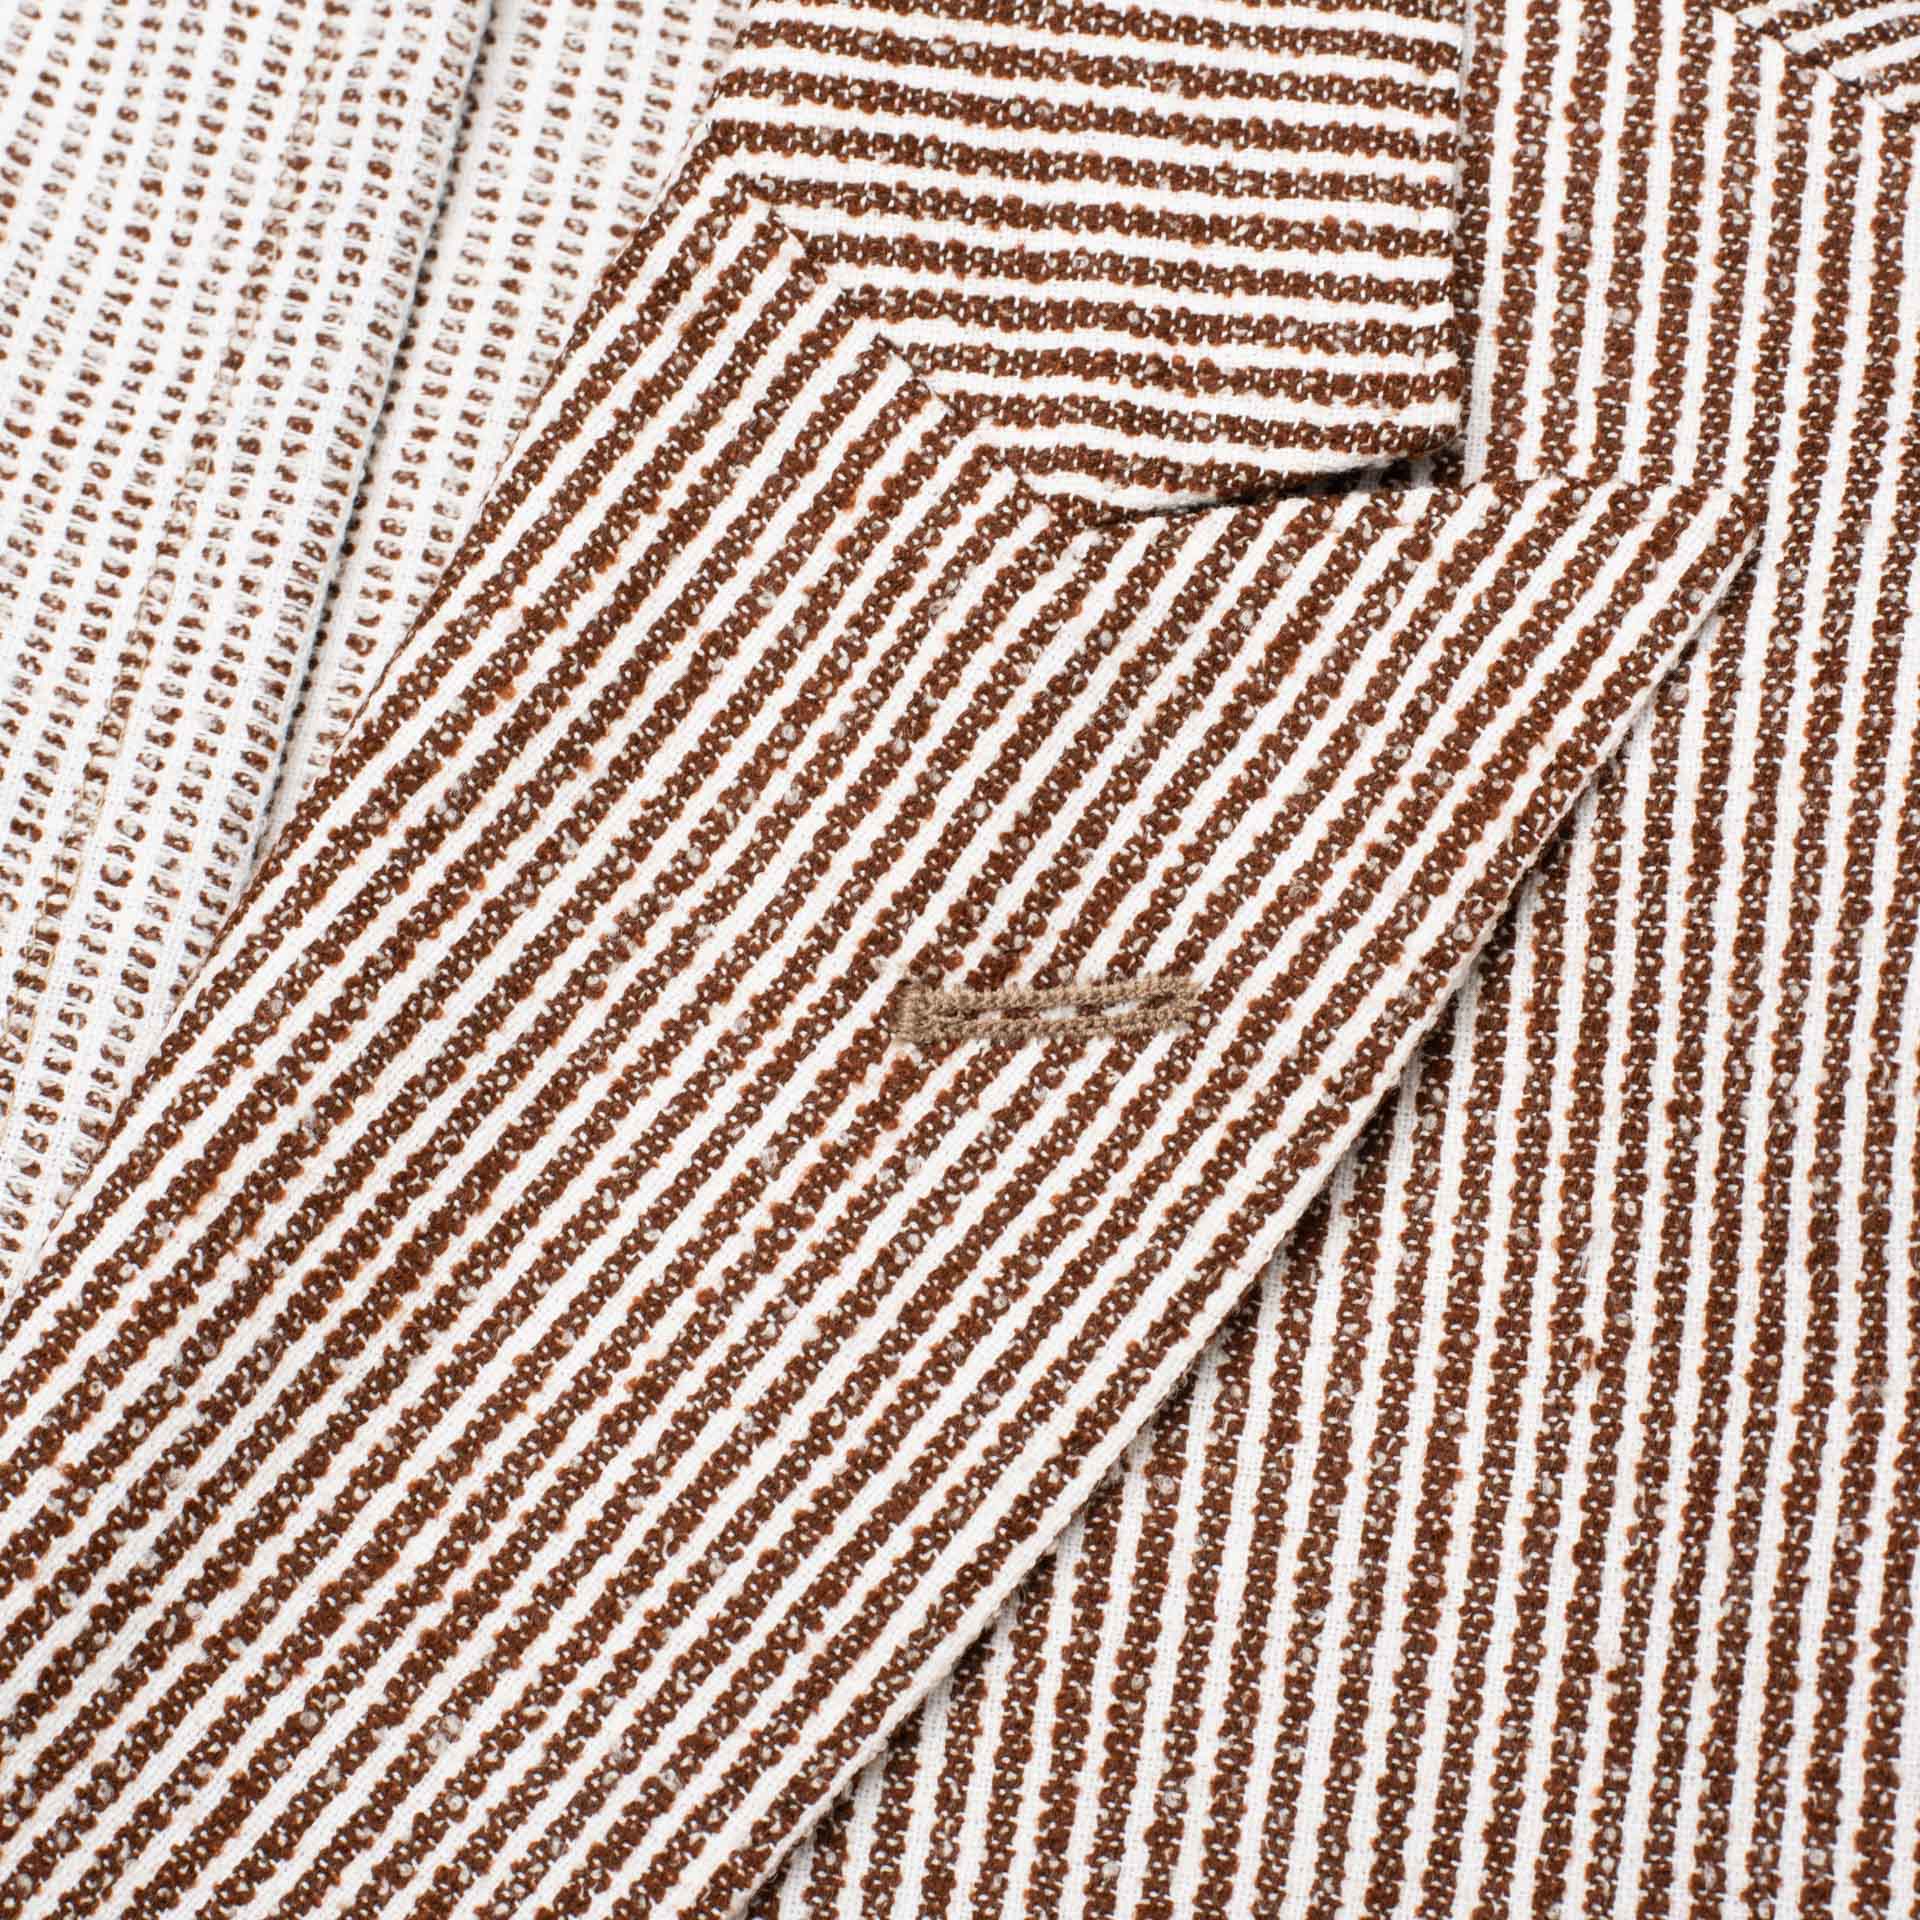 BOGLIOLI "K. Jacket" Brown Striped Wool-Cotton Unlined Peak Lapel Jacket NEW BOGLIOLI